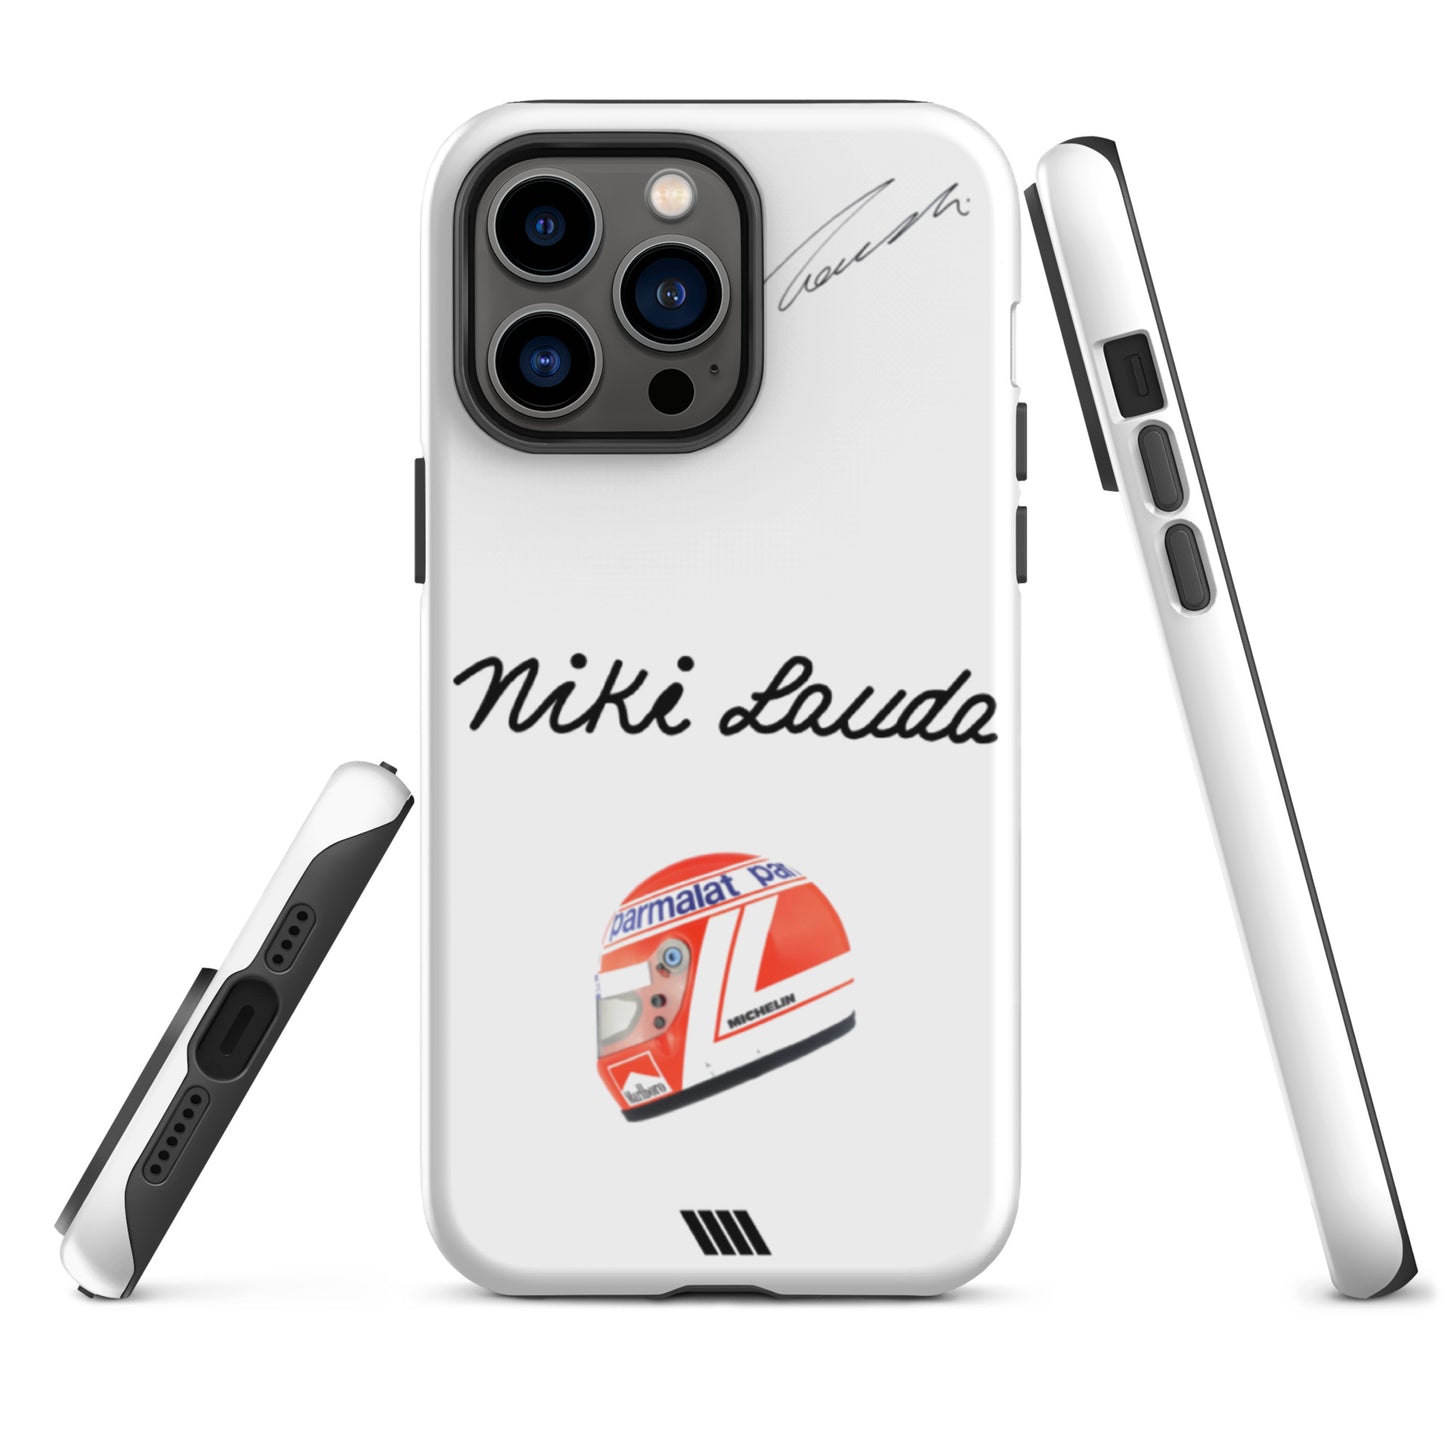 Niki Lauda Tough iPhone case